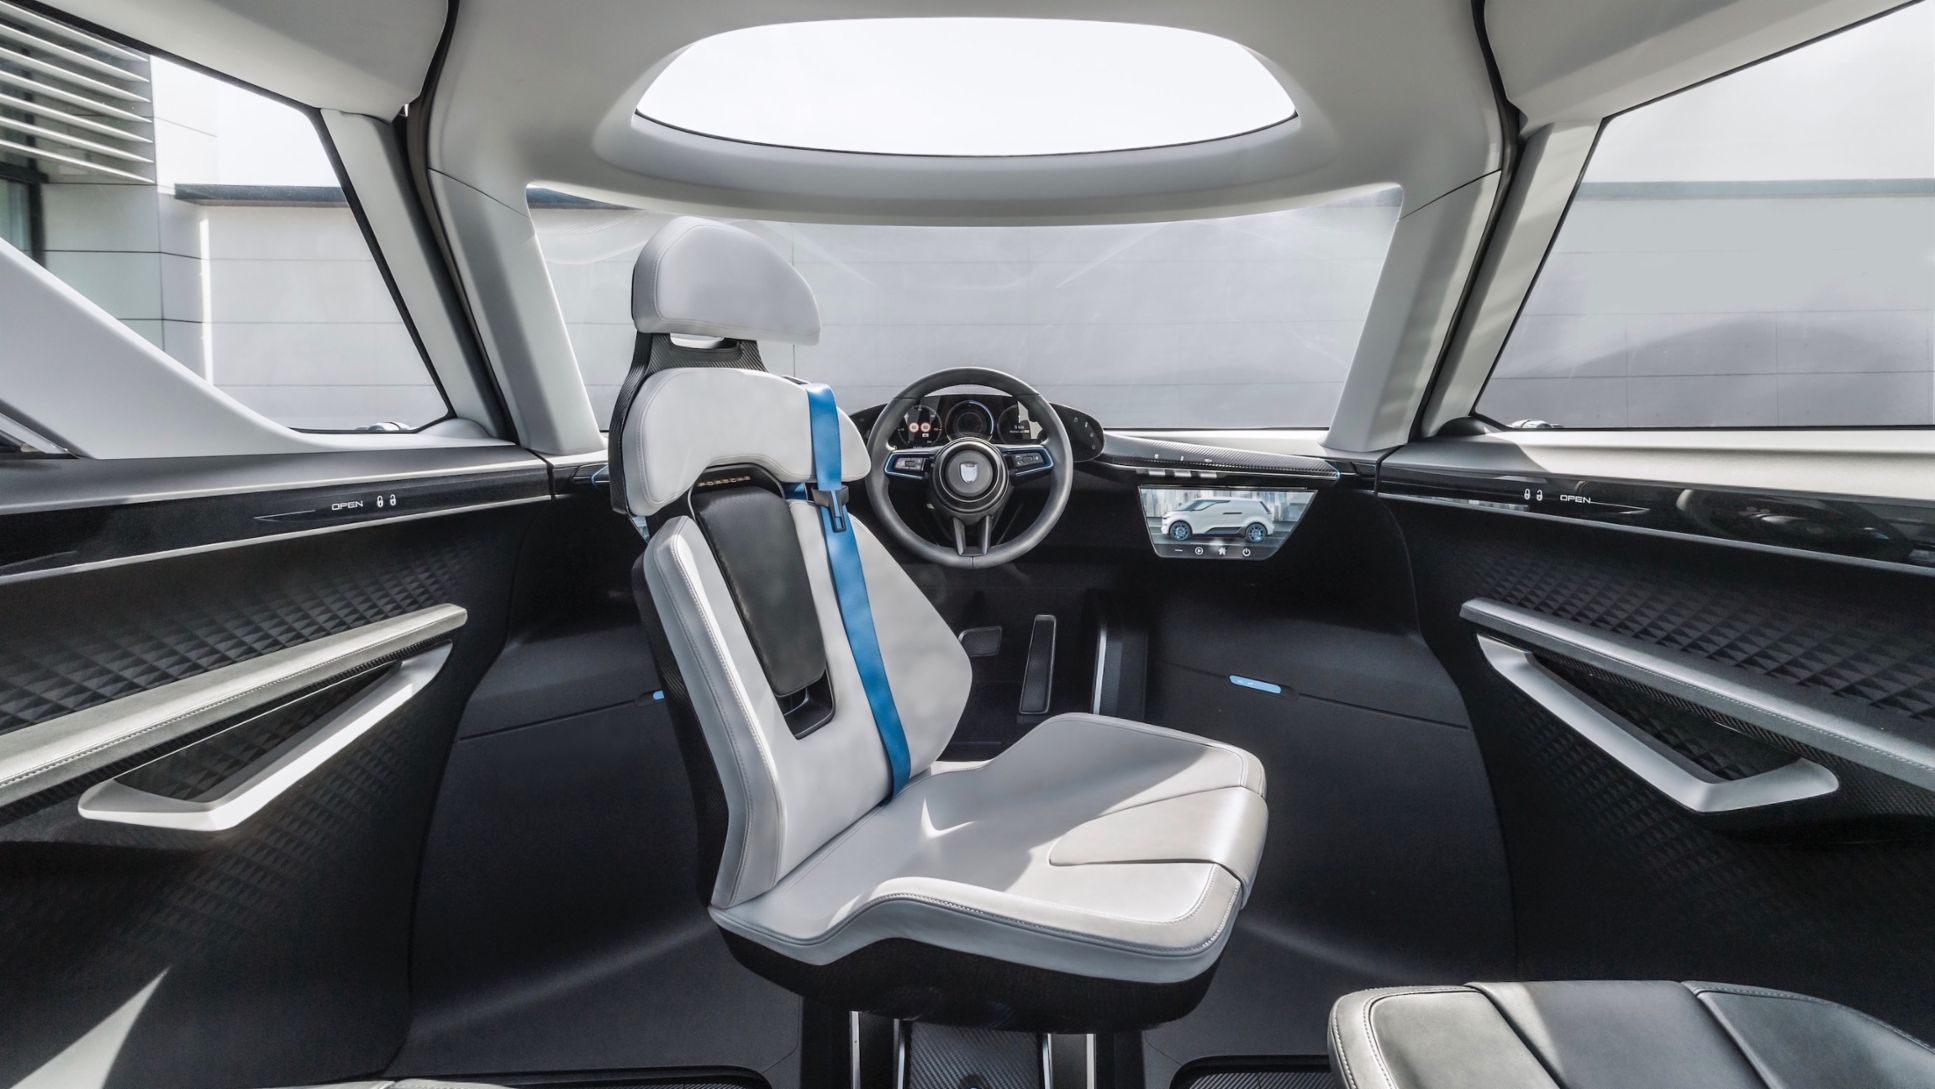 Porsche to revolutionise electric van design in the future